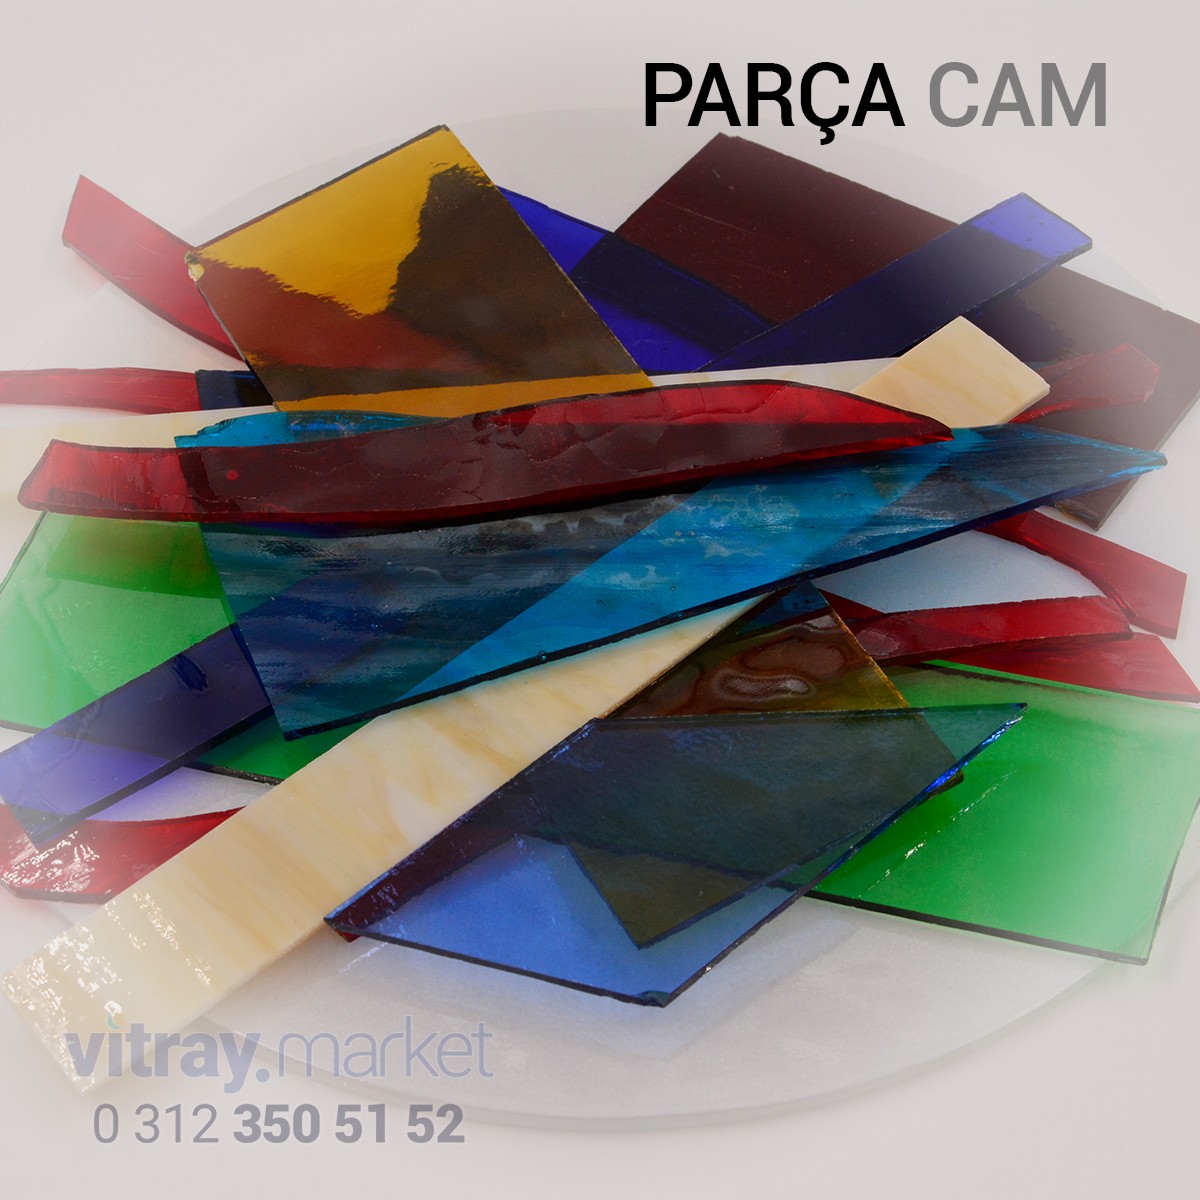 Parça Cam - (Opal - Katedral Füzyon Cam) Karışık Renk / KG